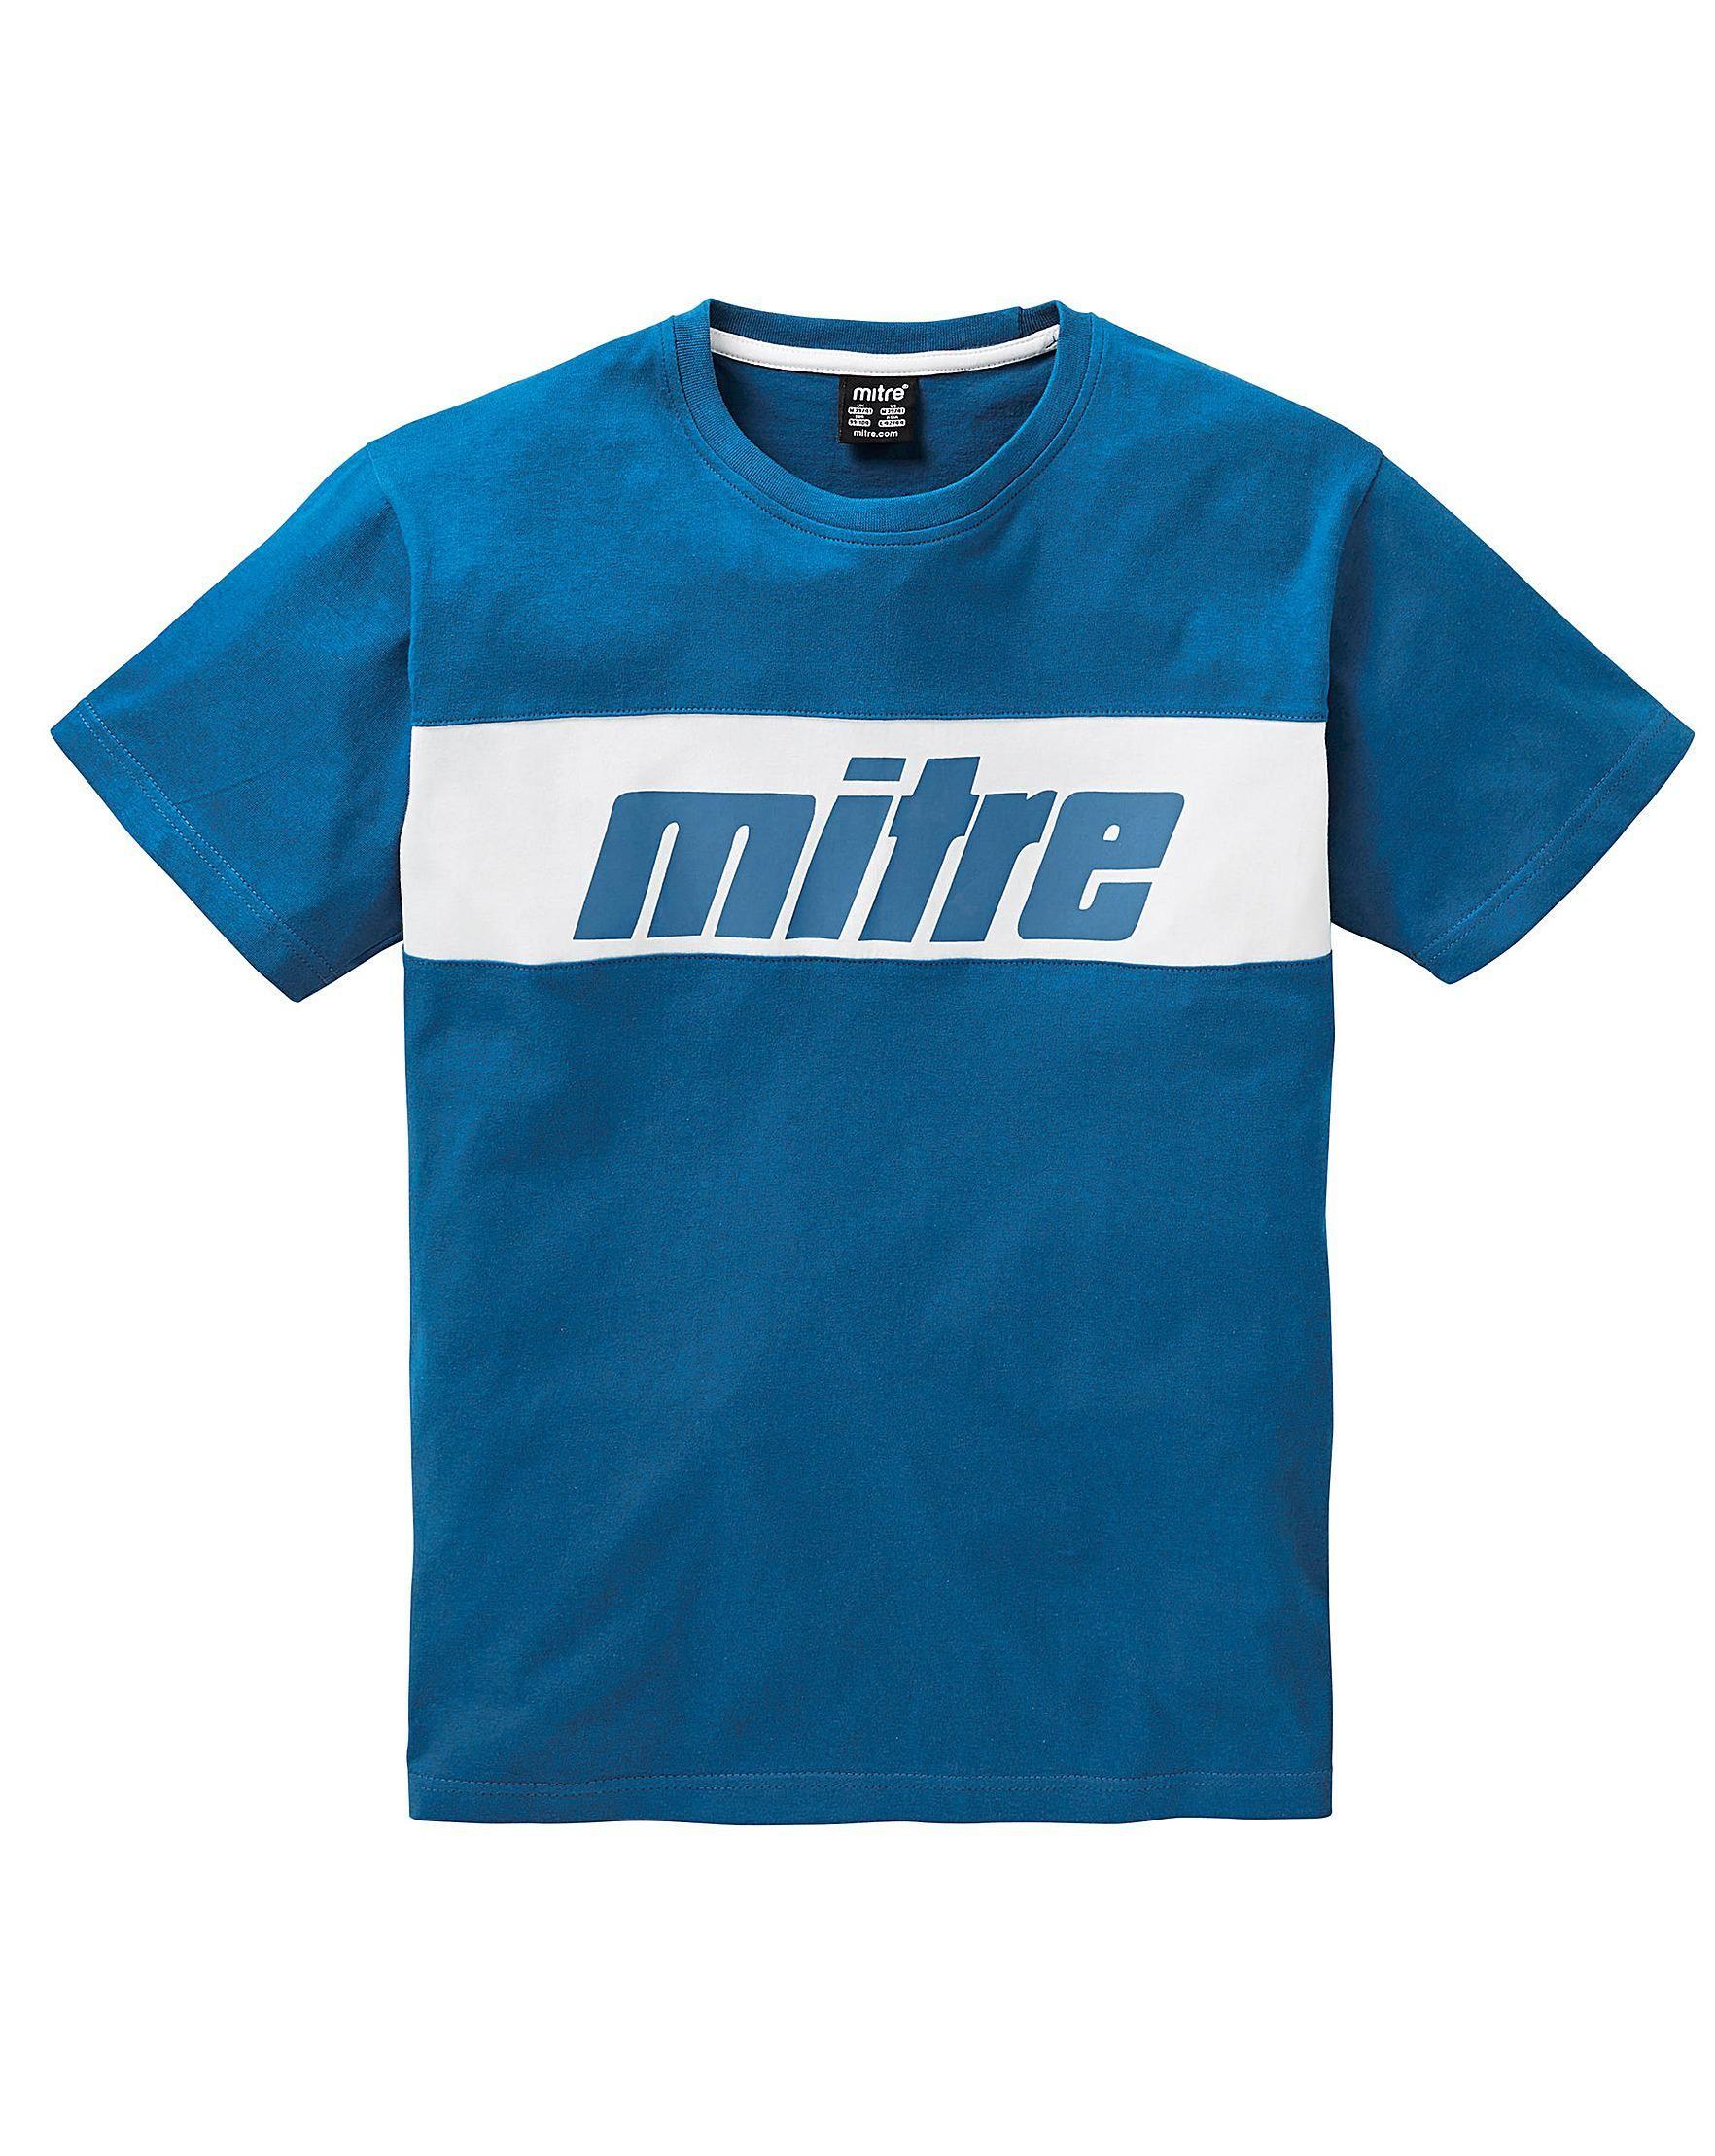 Mitre Logo - Mitre Logo T-shirt Regular in Blue for Men - Lyst